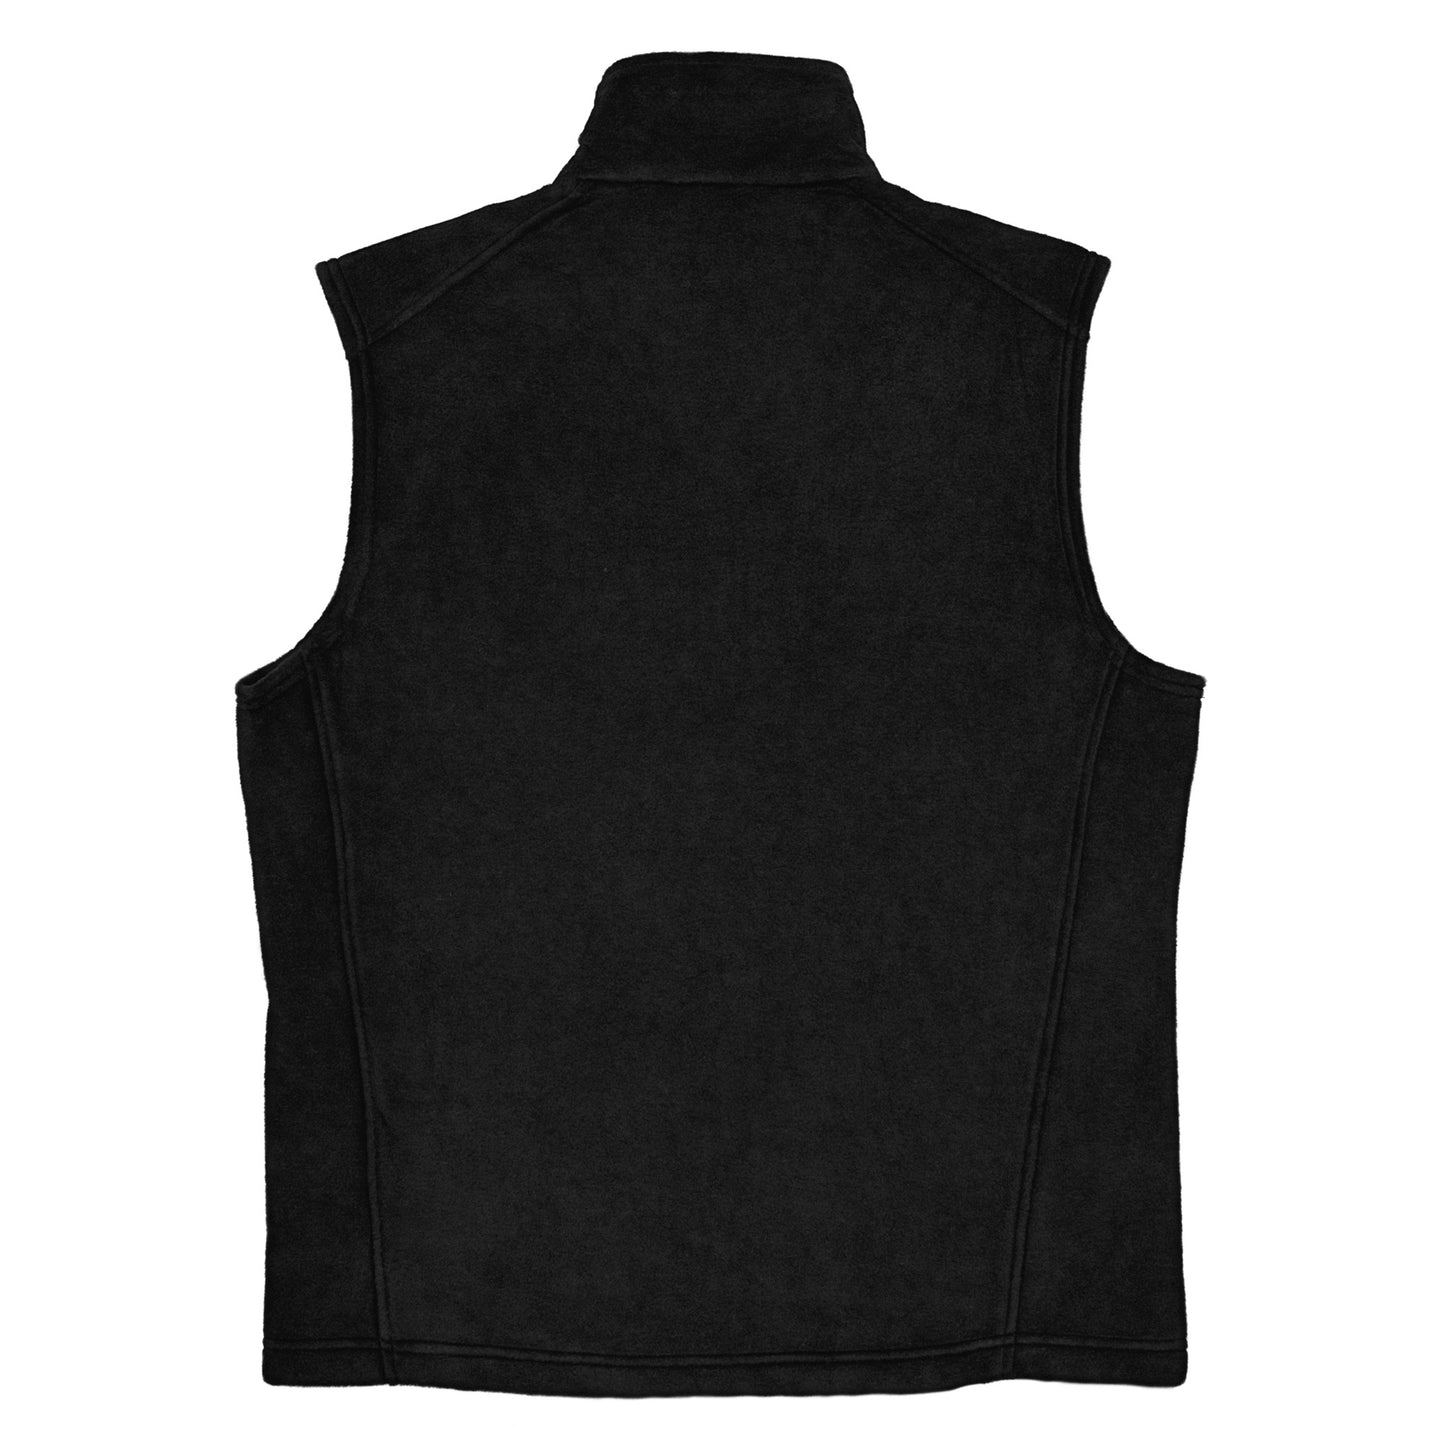 Adirondack Print Shop Men’s Columbia fleece vest